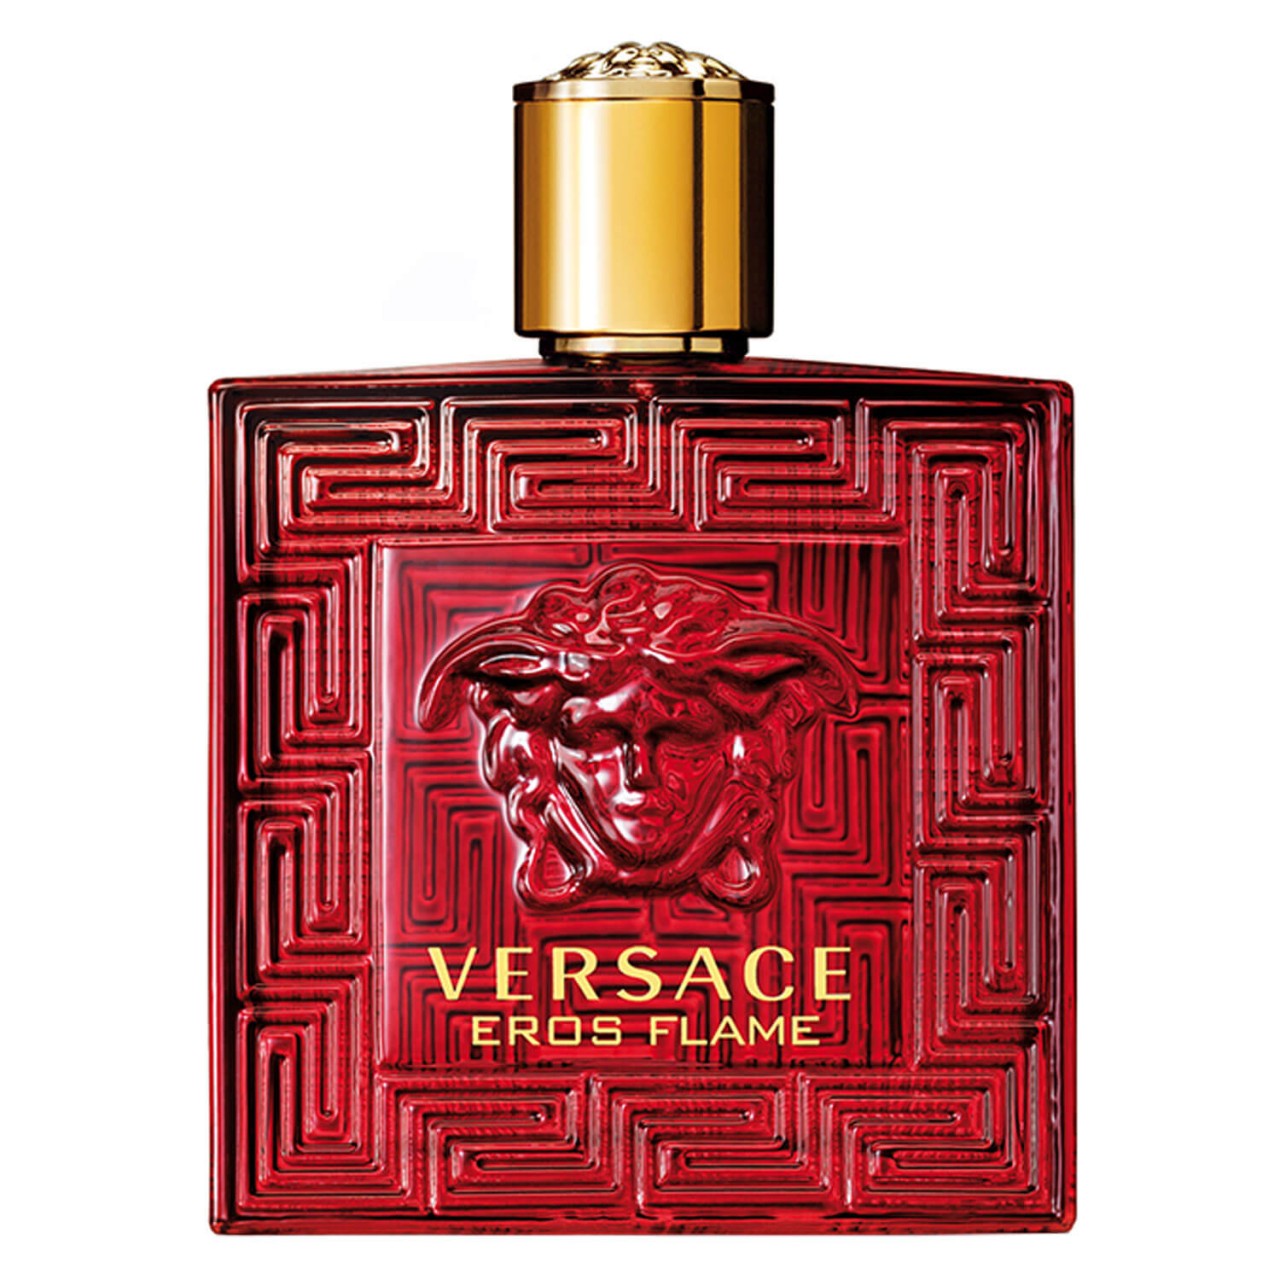 Versace Eros - Flame Eau de Parfum Natural Spray von Versace